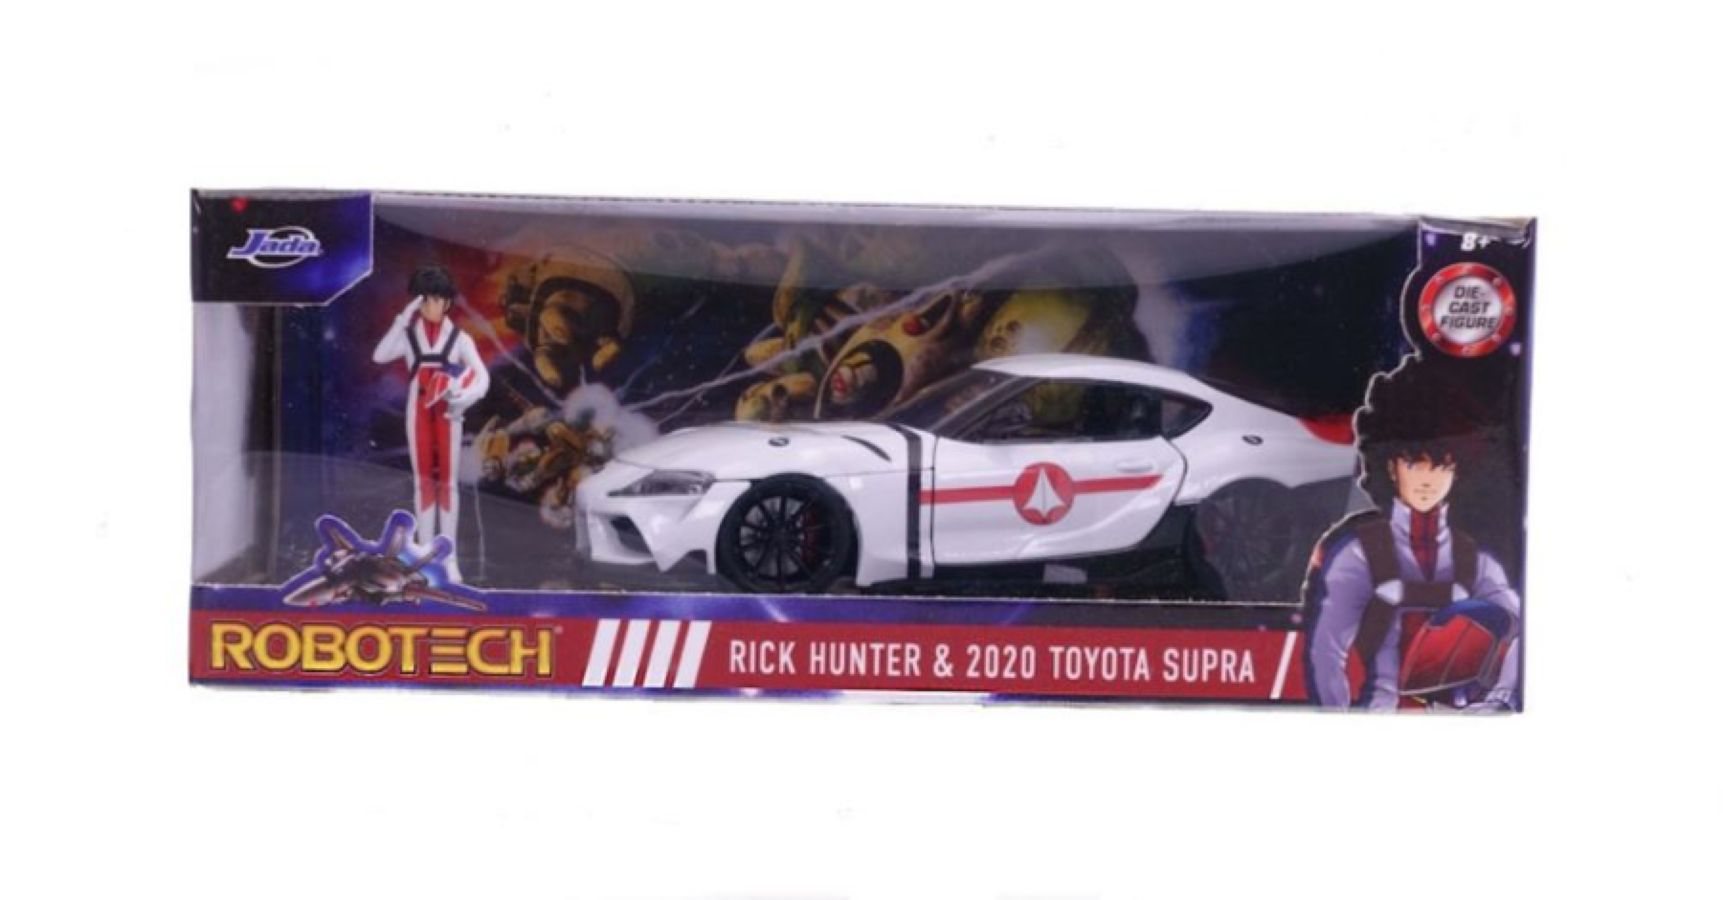 Robotech - Rick & 2020 Toyota Supra 1:24 Scale